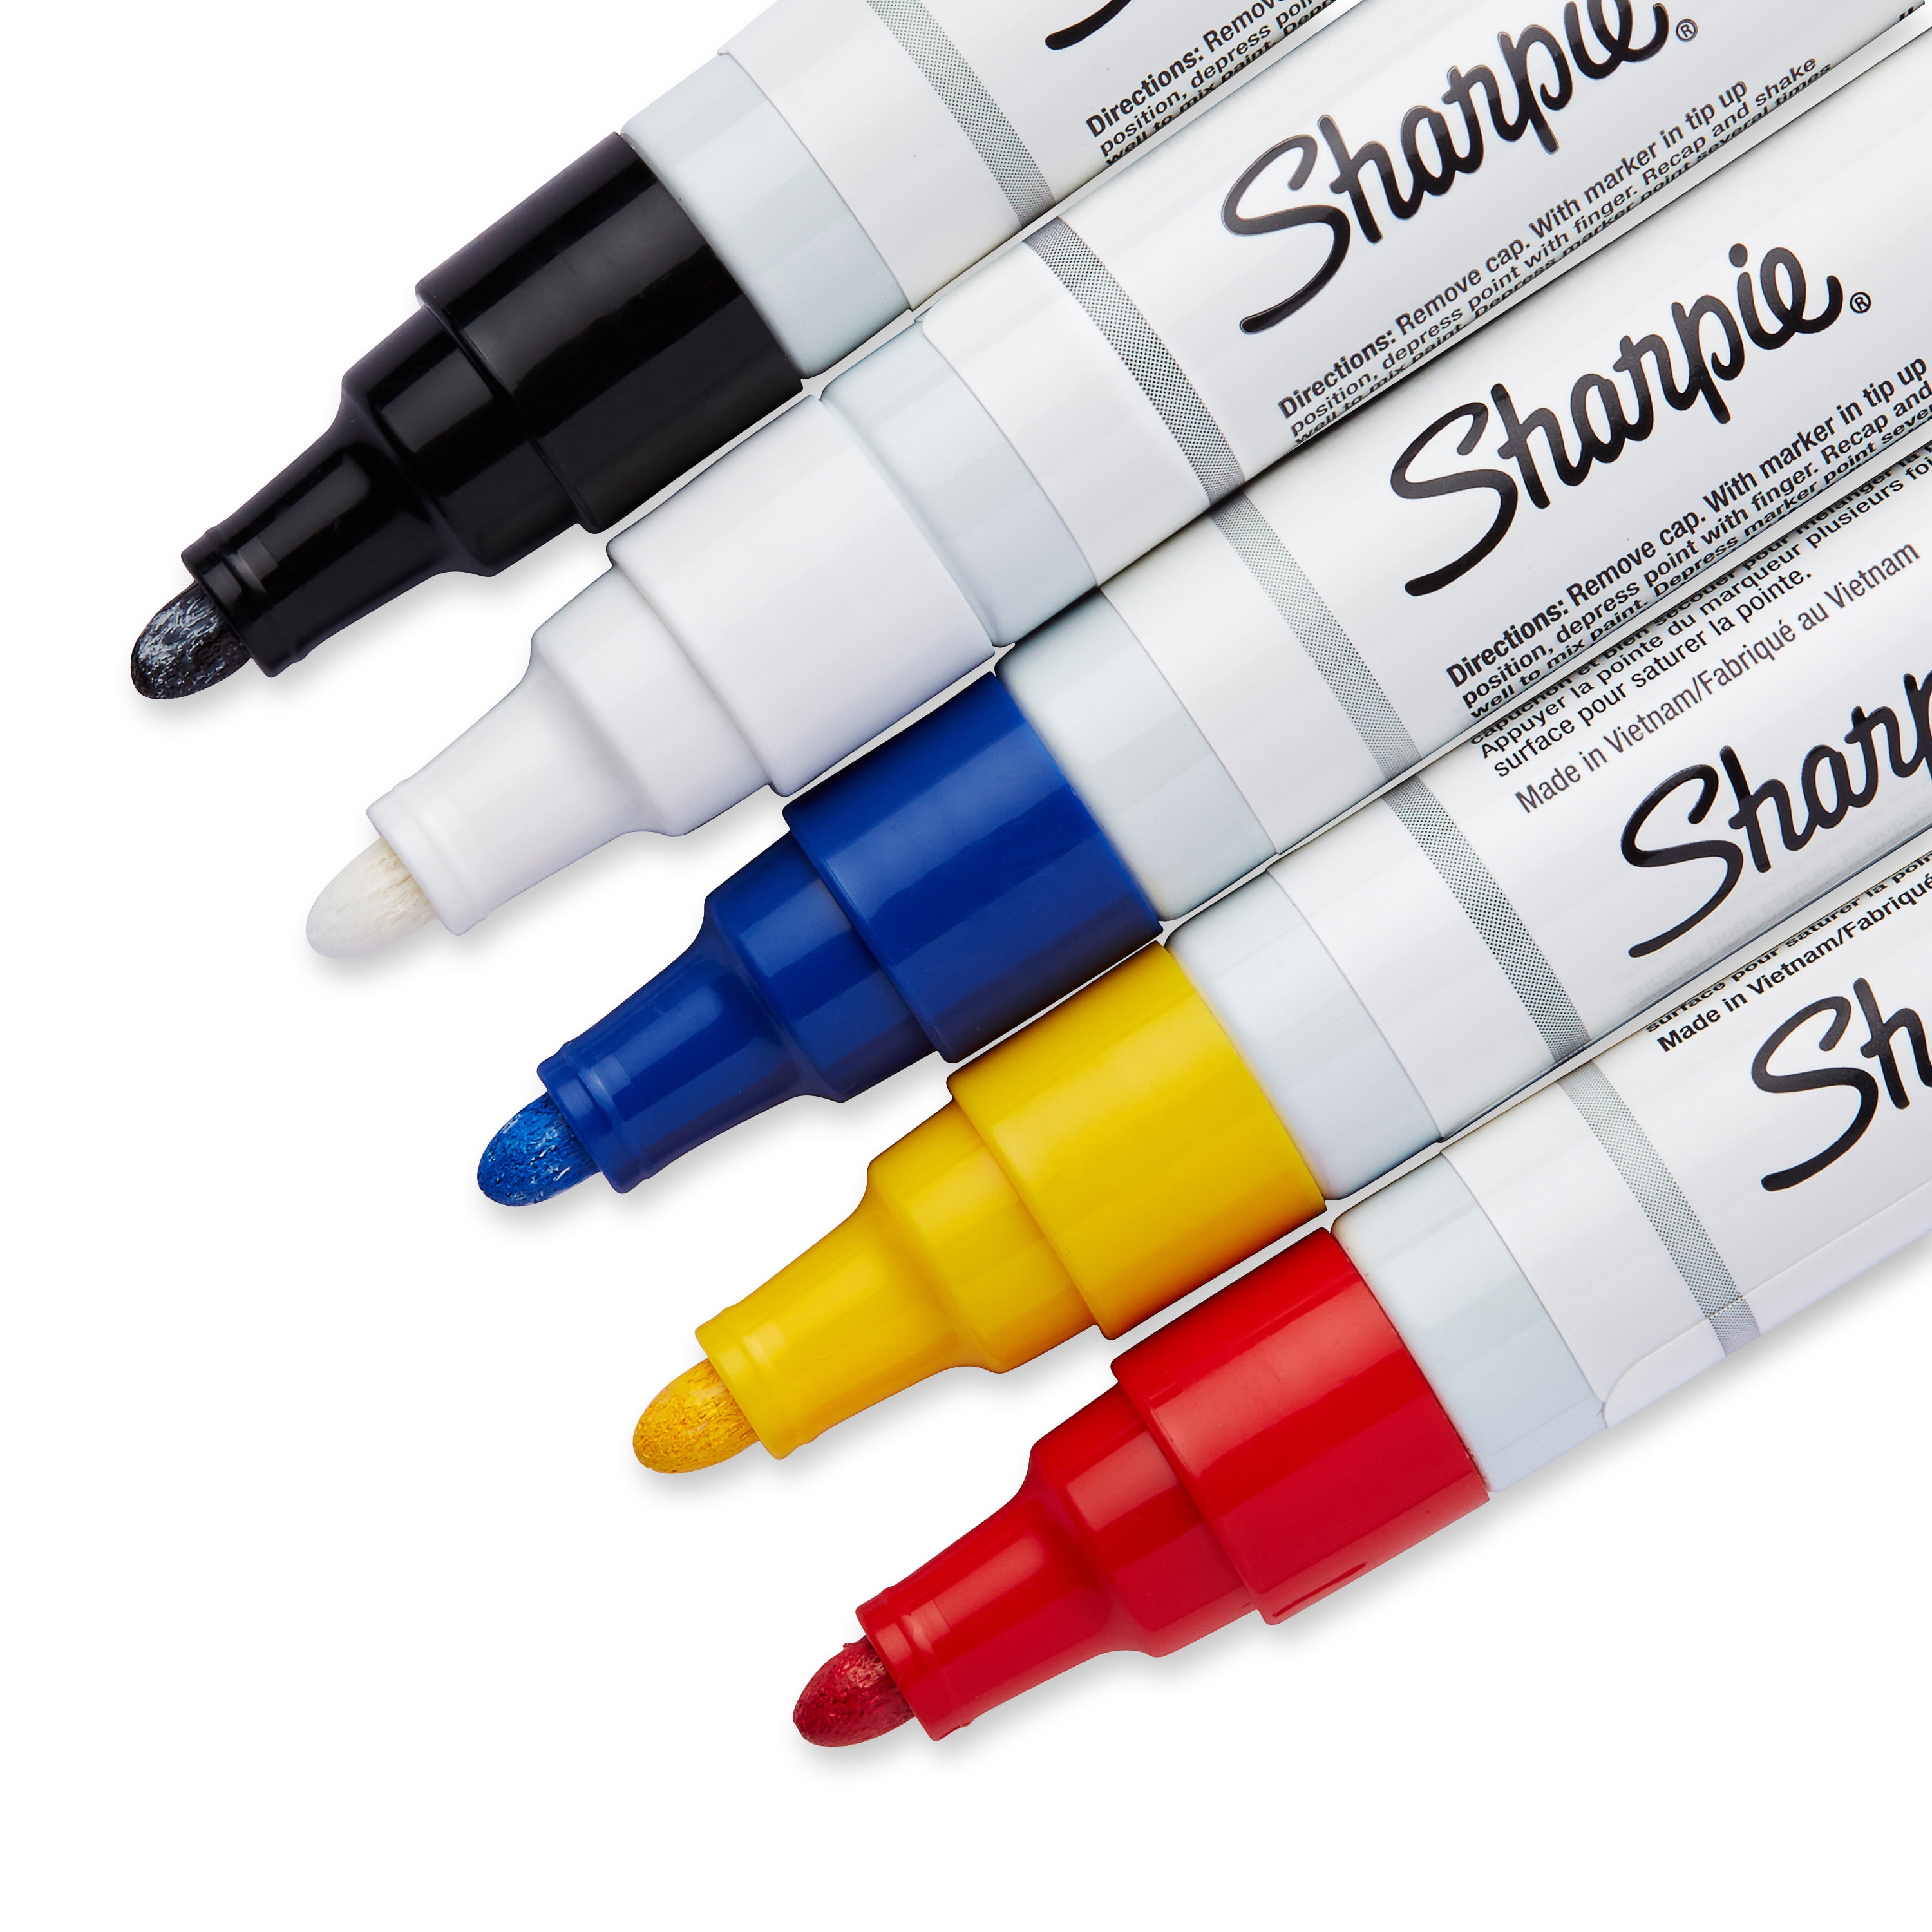 Sharpie Medium Point Oil Based Paint Markers - 5 Piece Set, Hobby Lobby